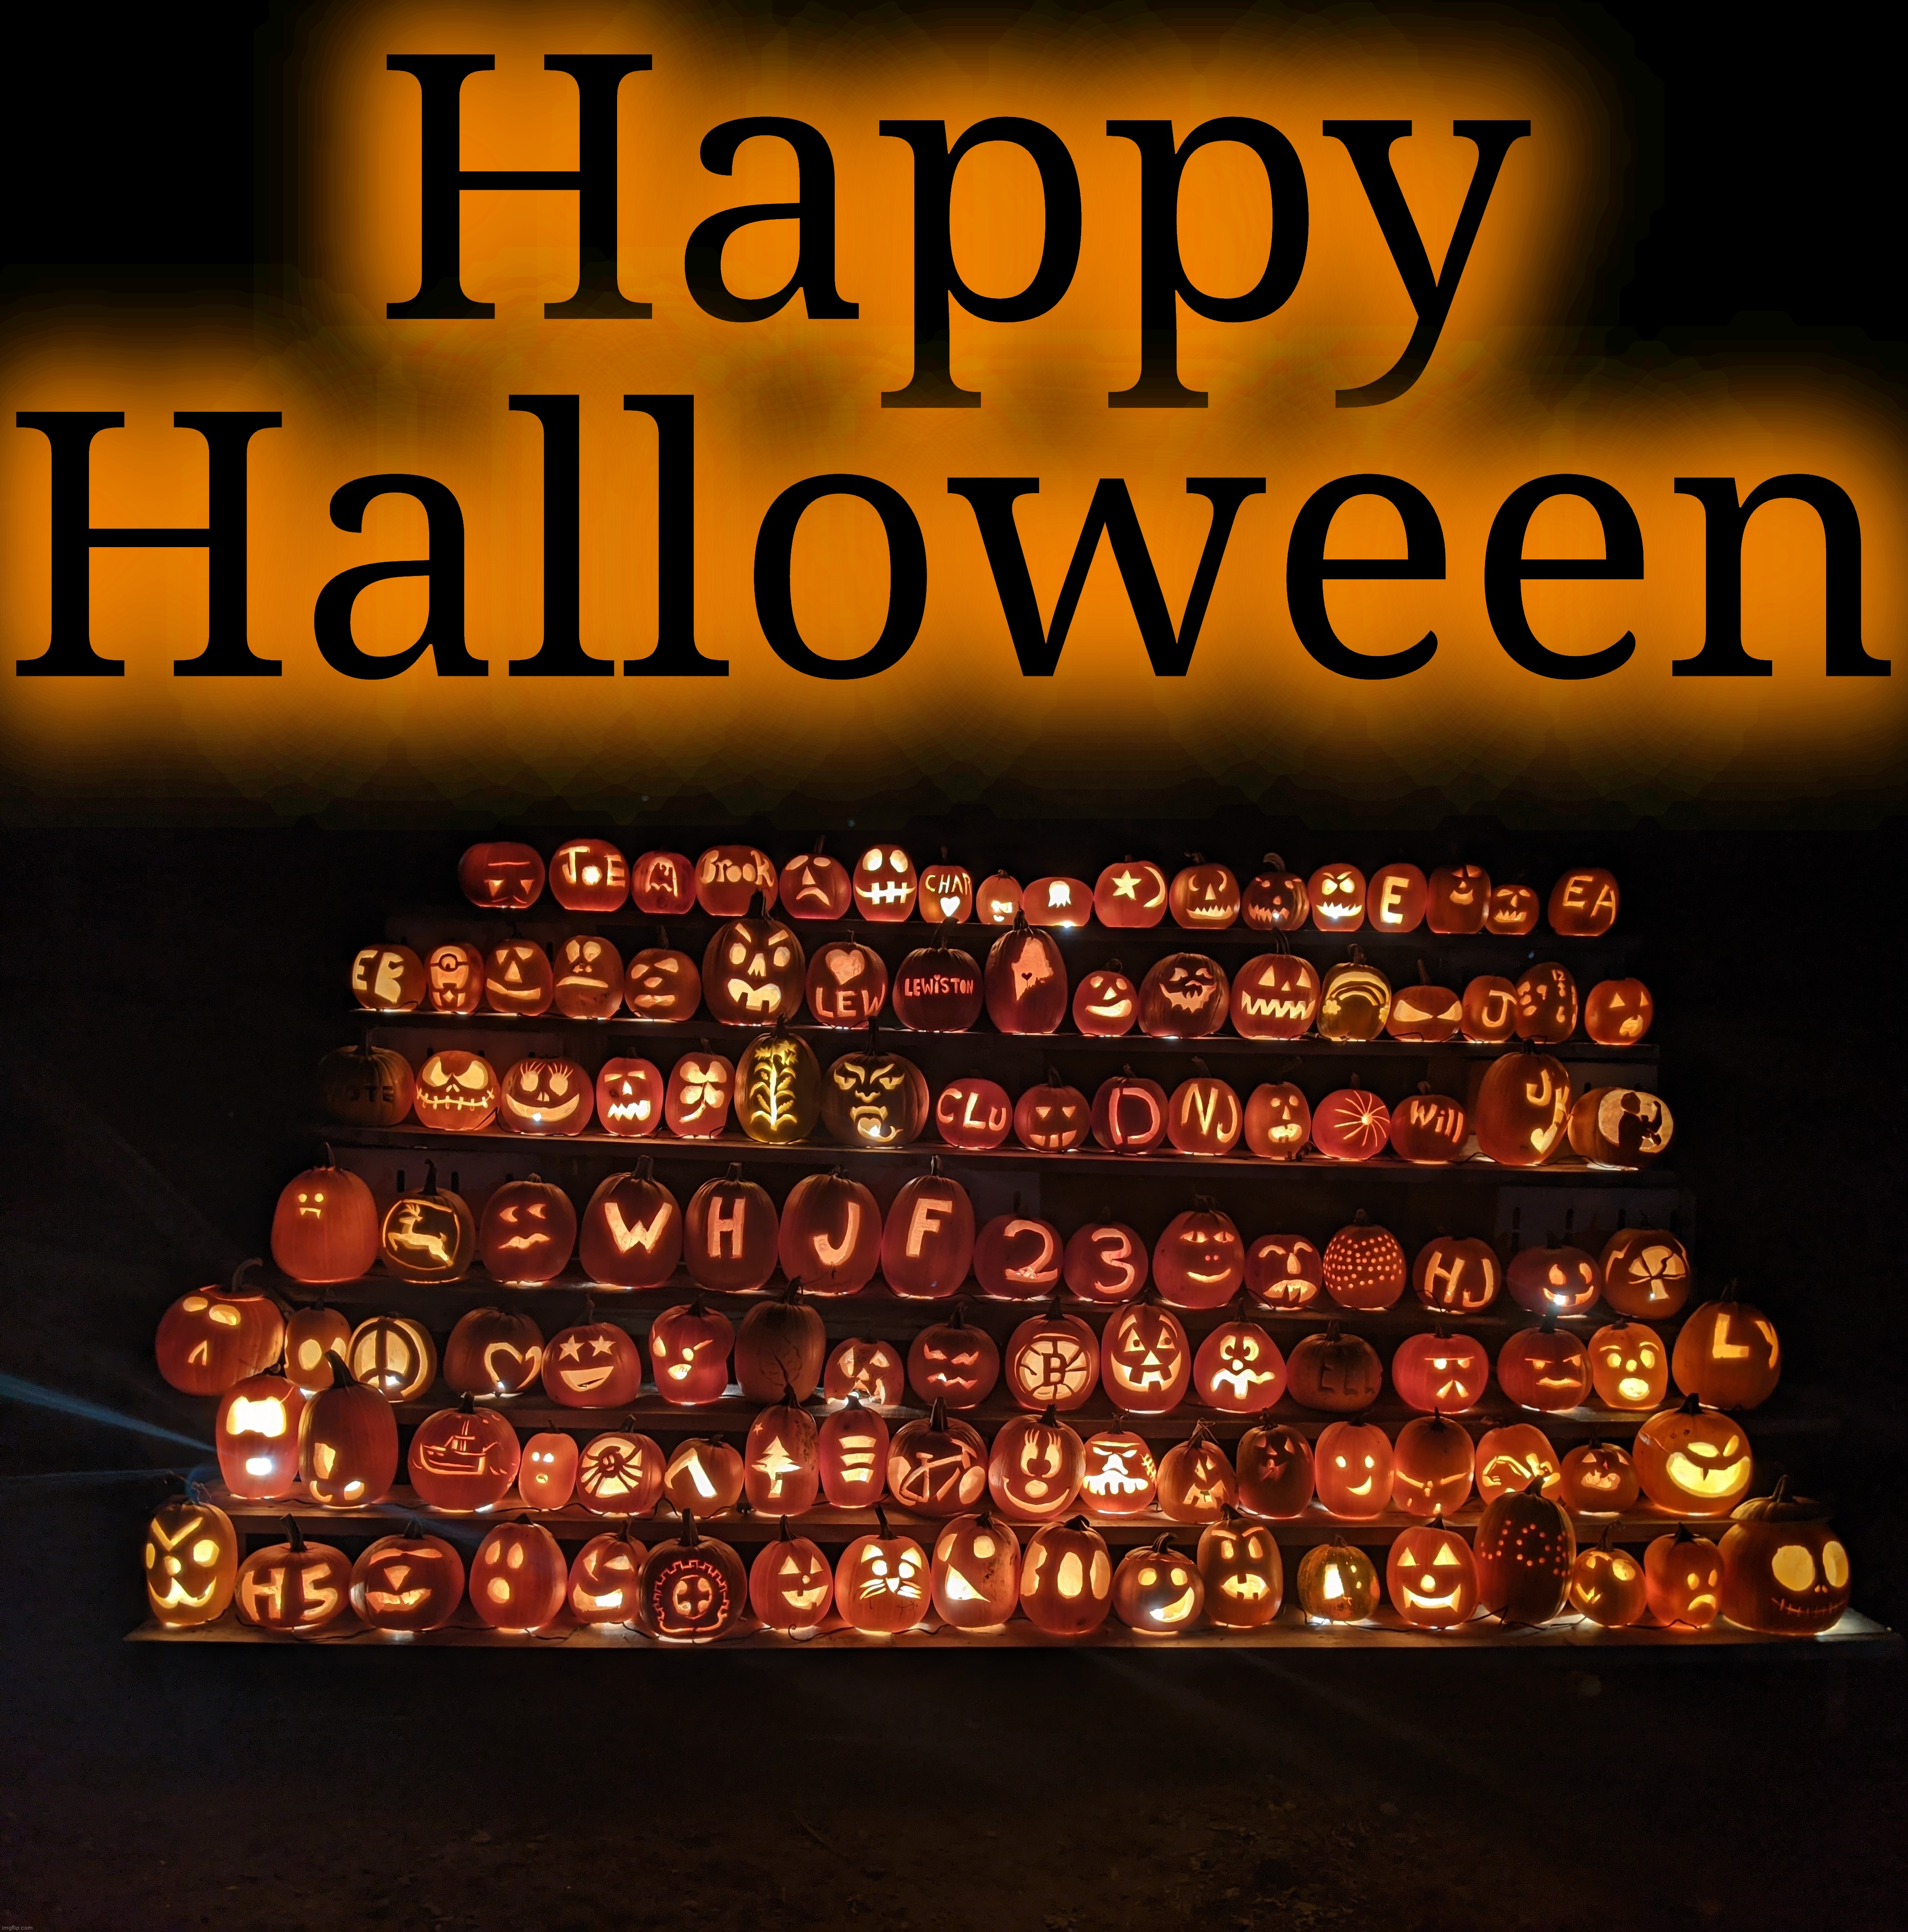 Happy Halloween | Happy Halloween | image tagged in happy halloween | made w/ Imgflip meme maker